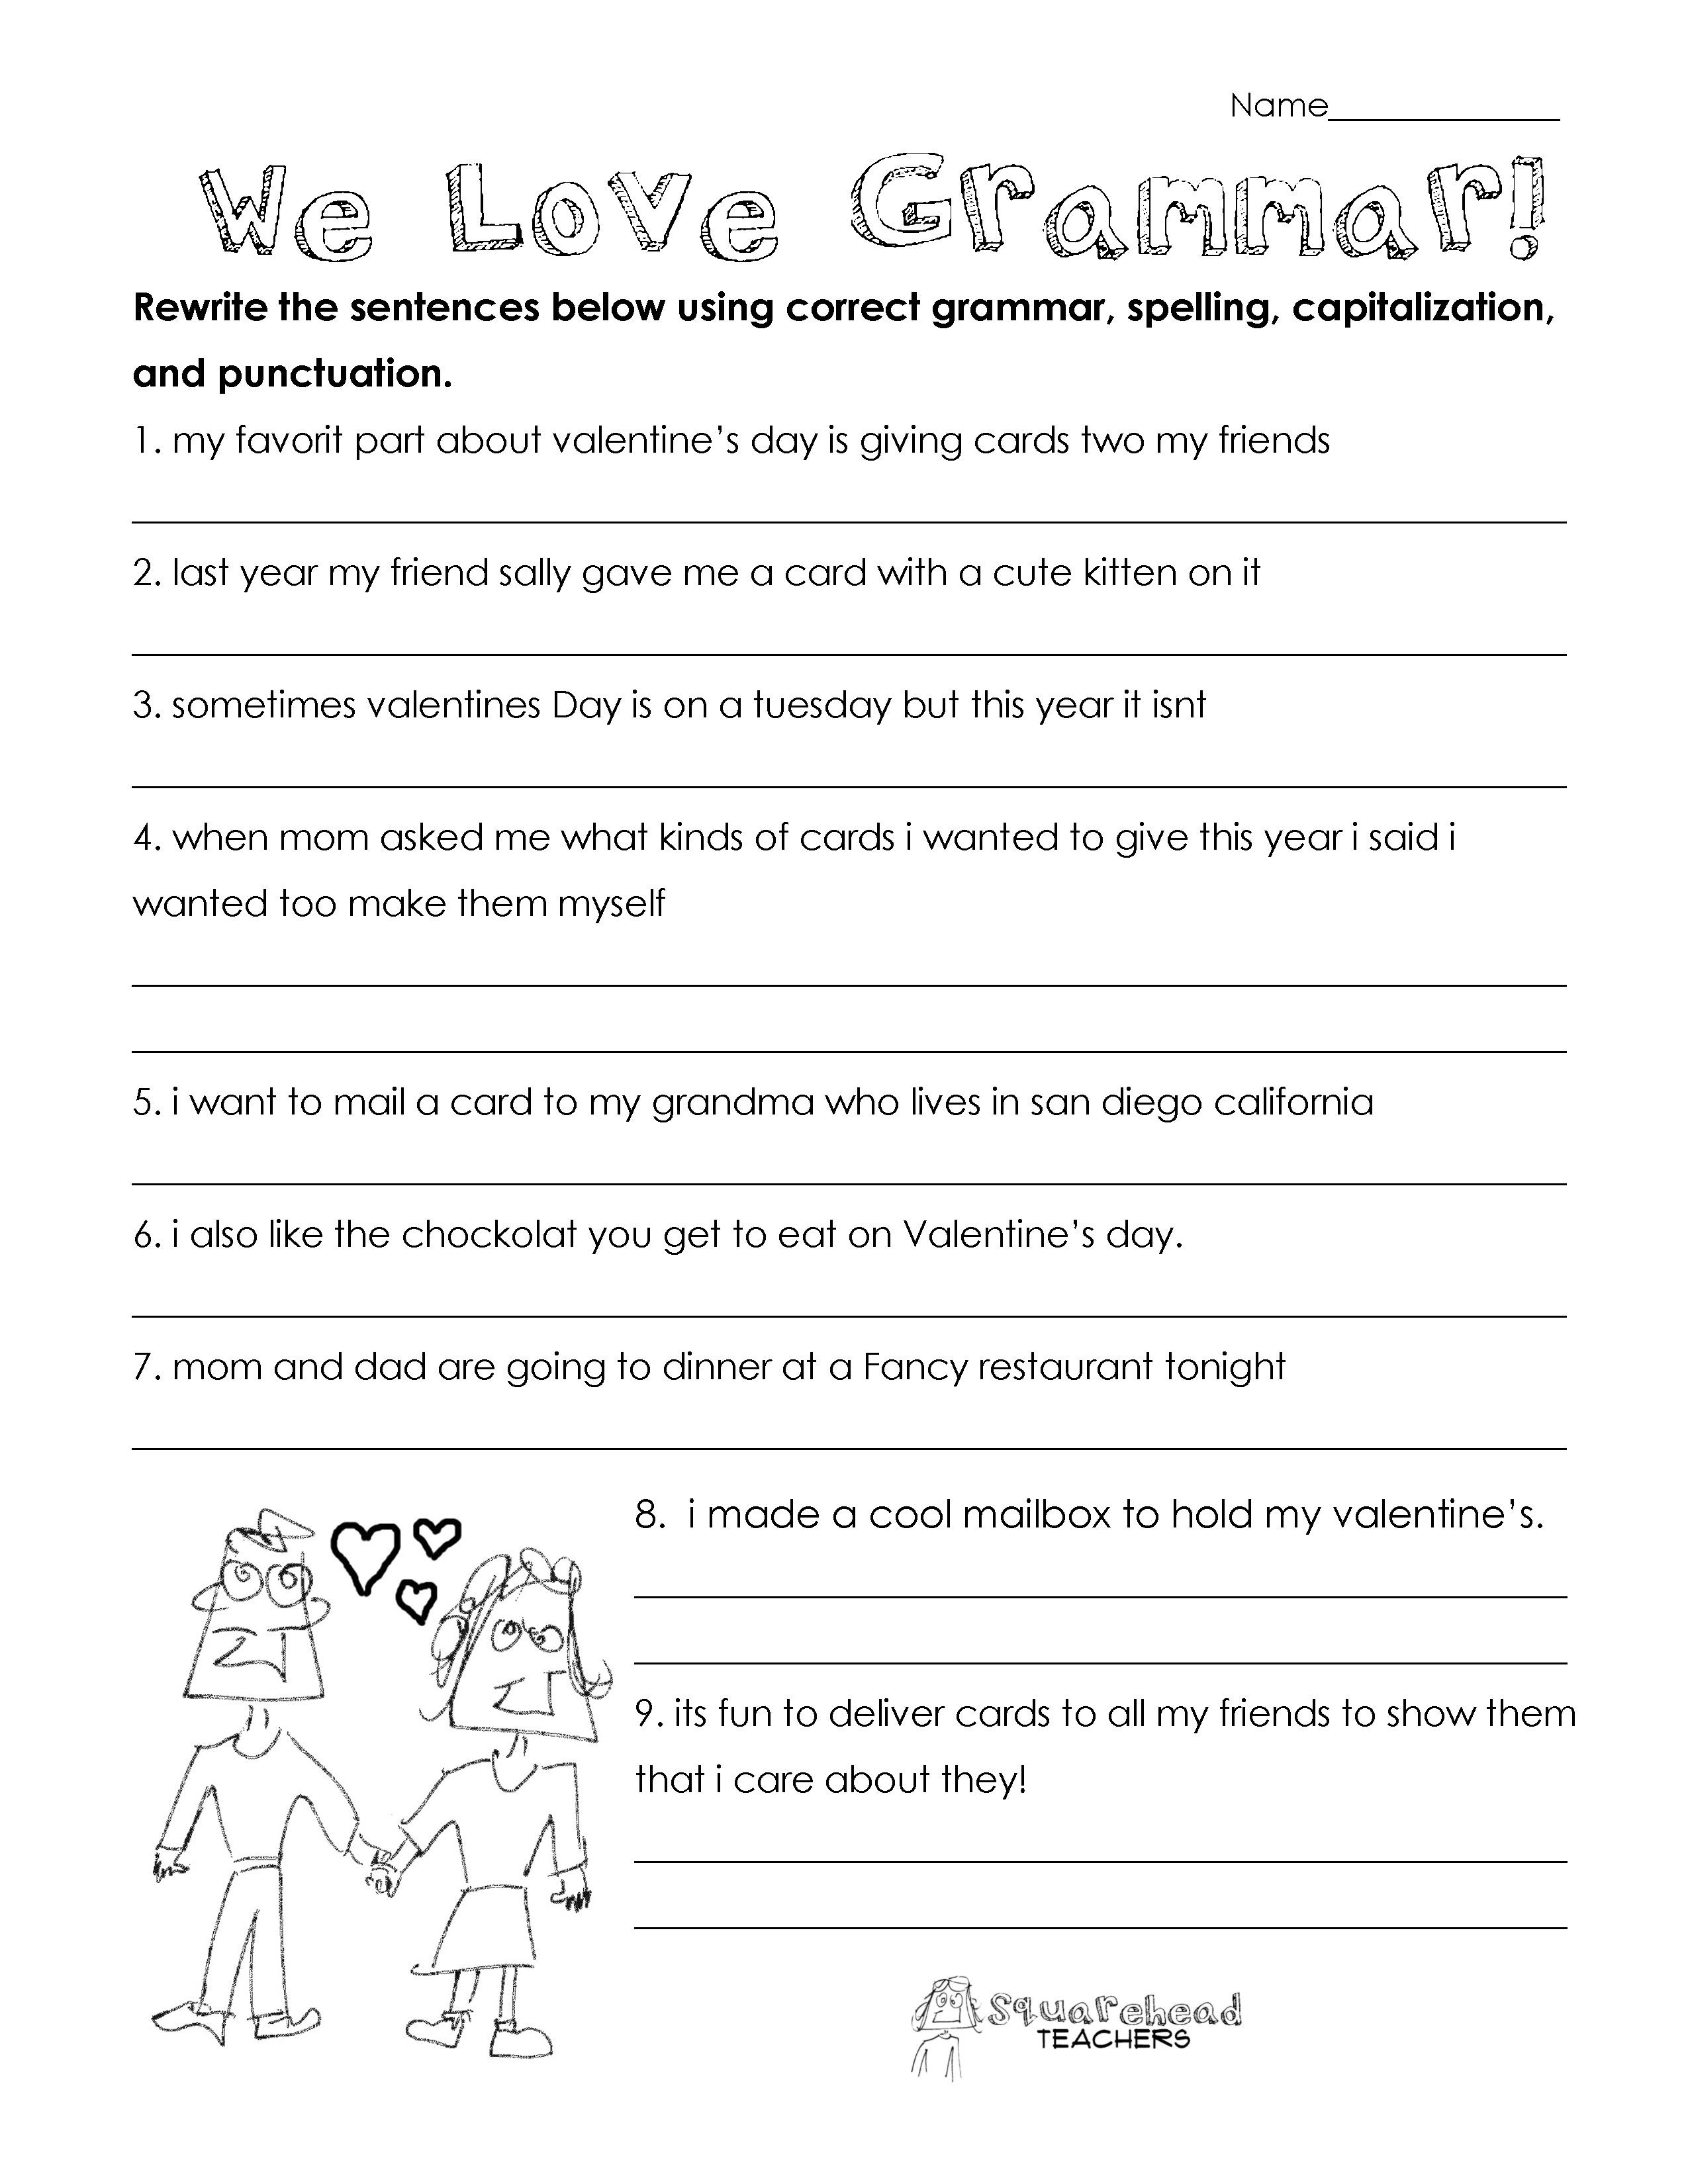 Grammar Worksheets for 8th Graders Valentine S Day Grammar Free Worksheet for 3rd Grade and Up